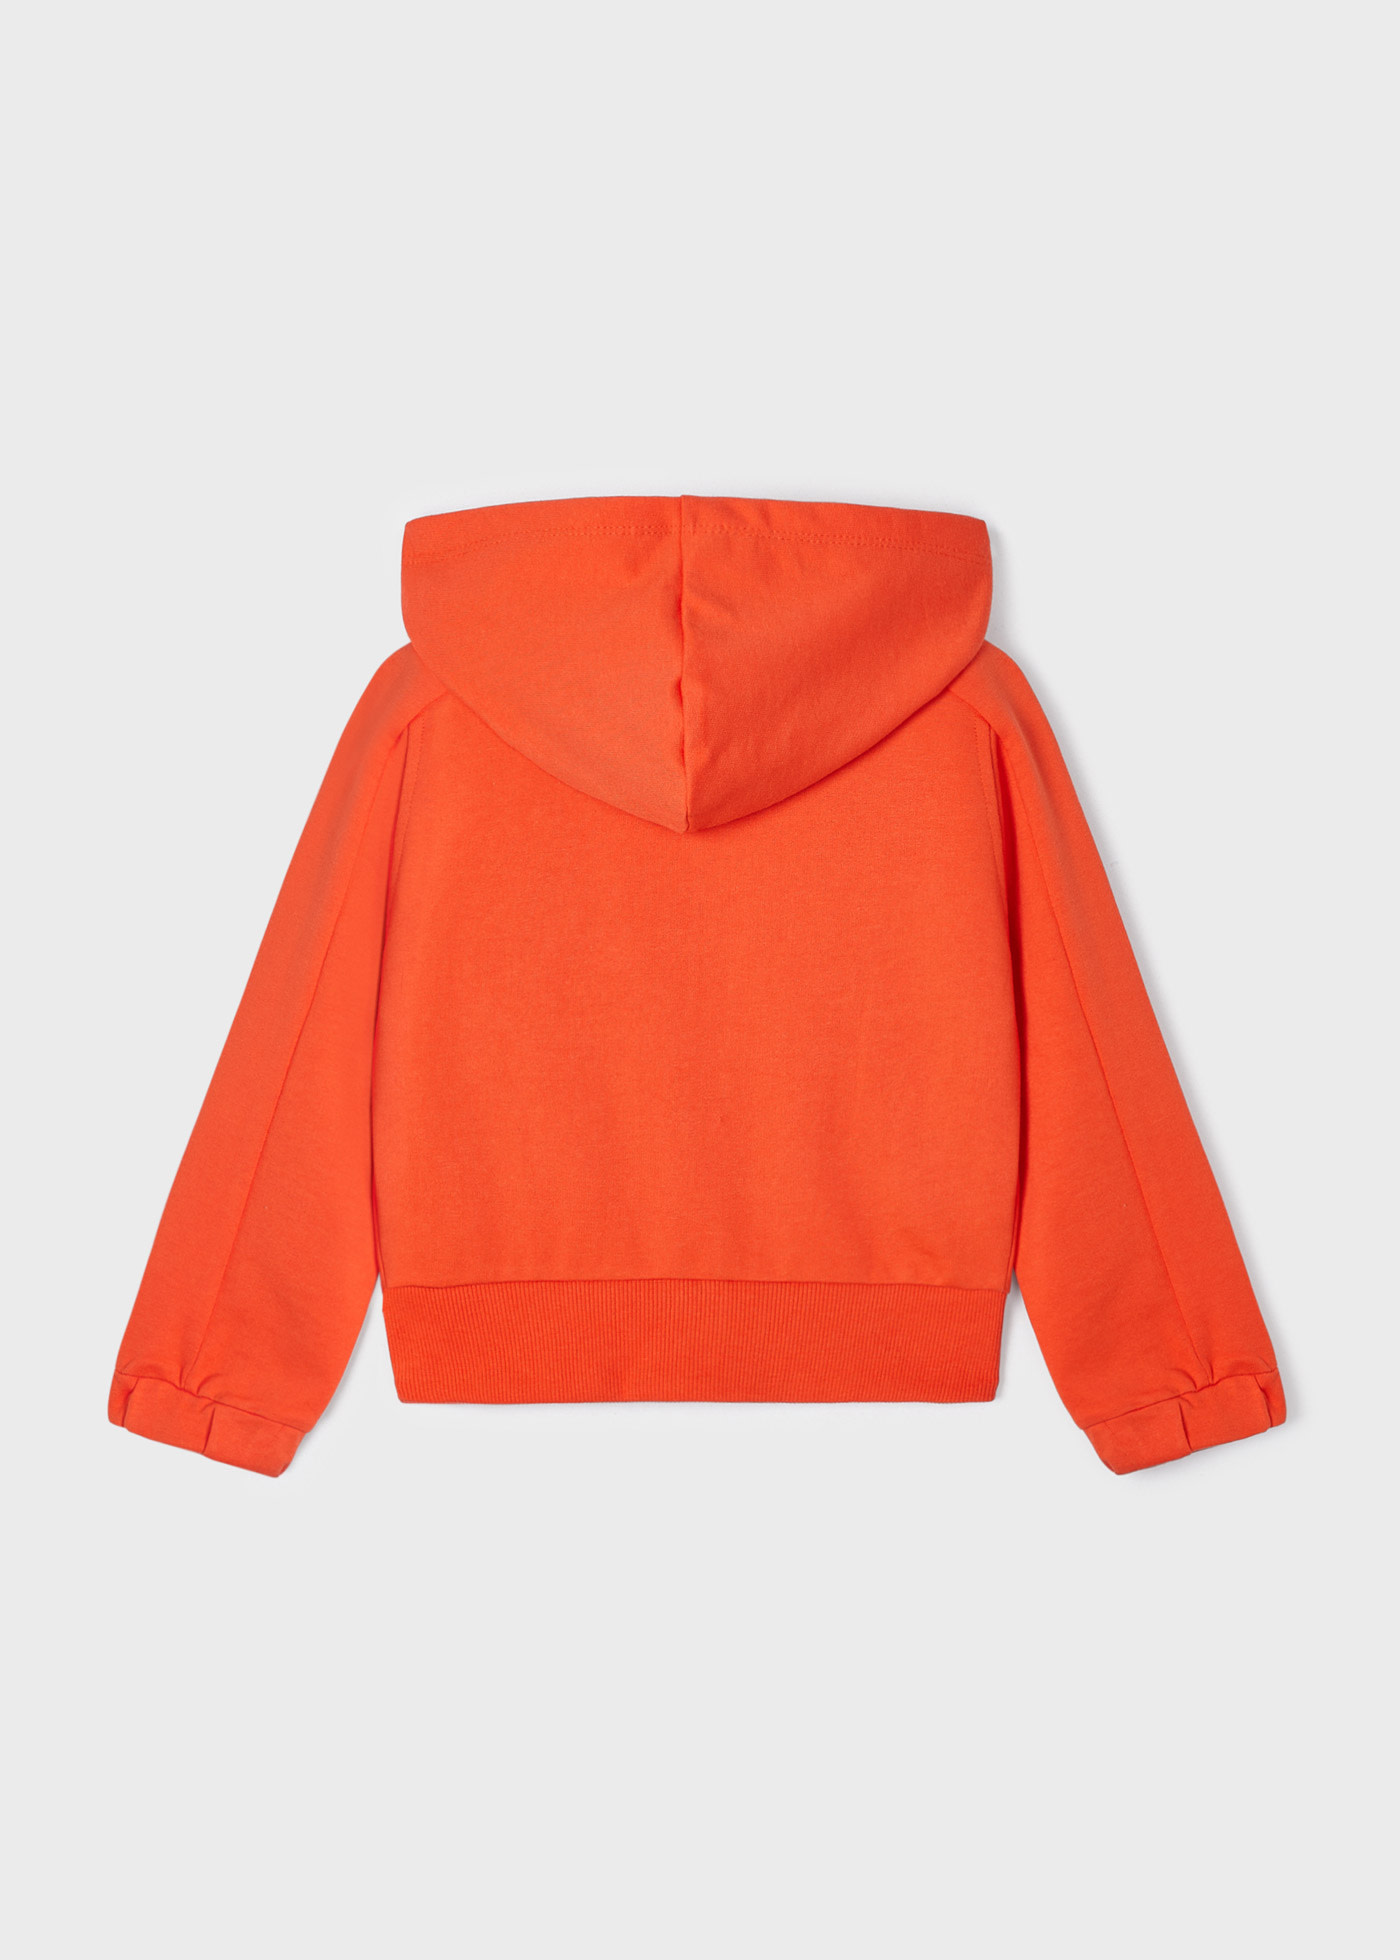 plain orange hoodie